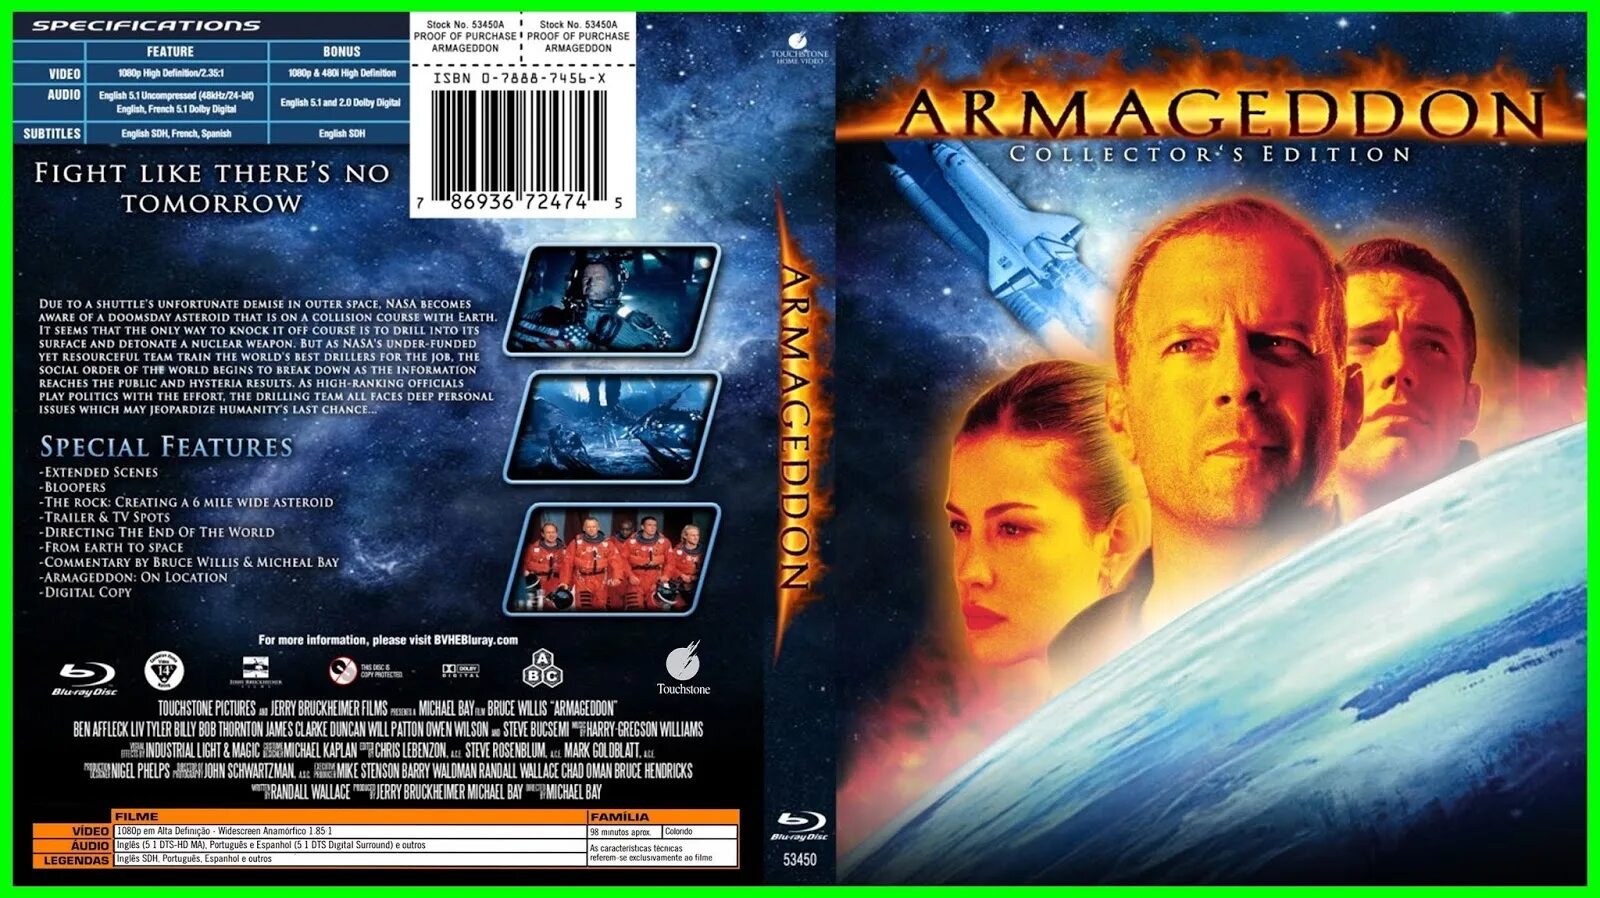 Армагеддон купить. Армагеддон 1998. Armageddon 1998 DVD Cover. Cover. Обложка DVD Армагеддон. 1998.